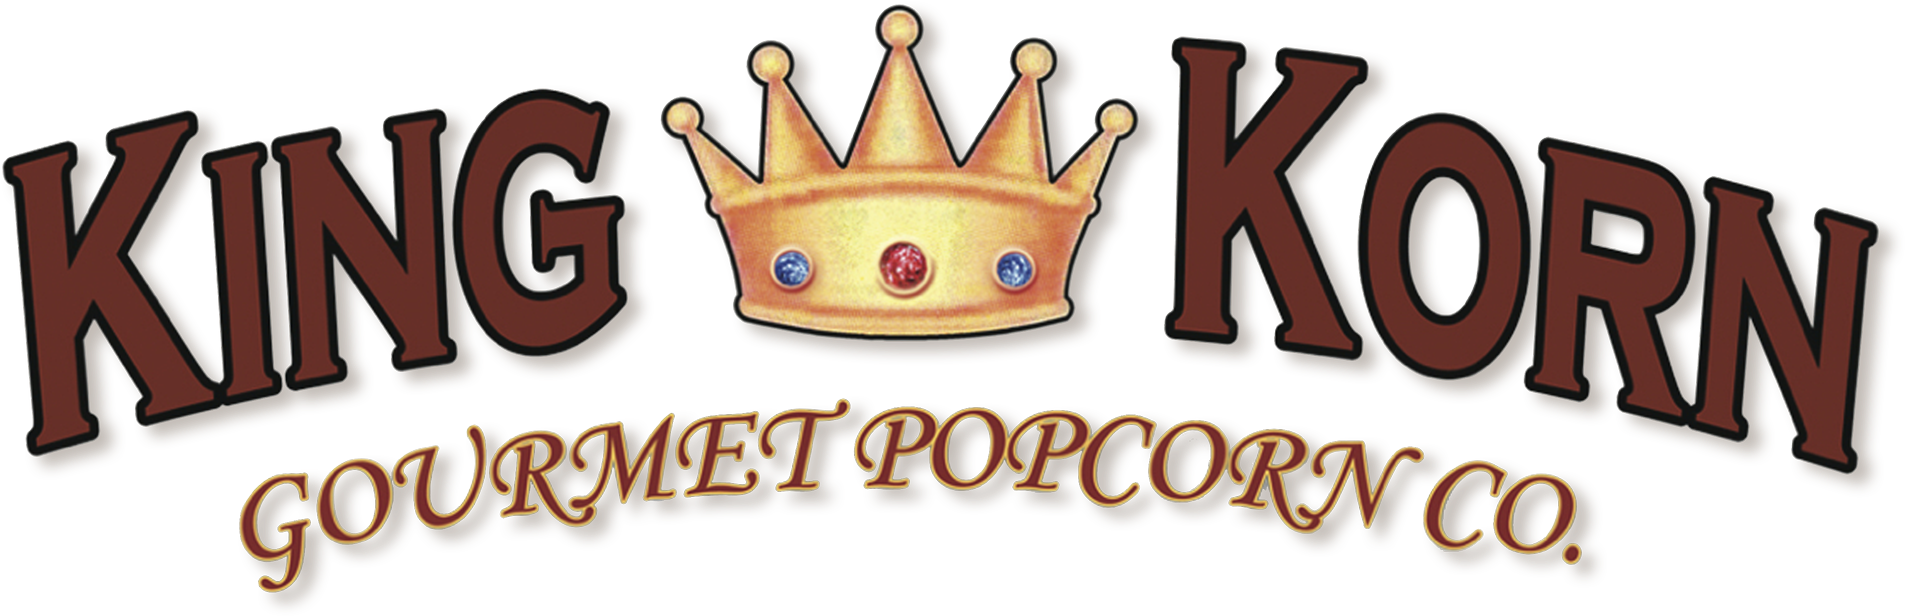 Download King Korn - Popcorn PNG Image with No Background 